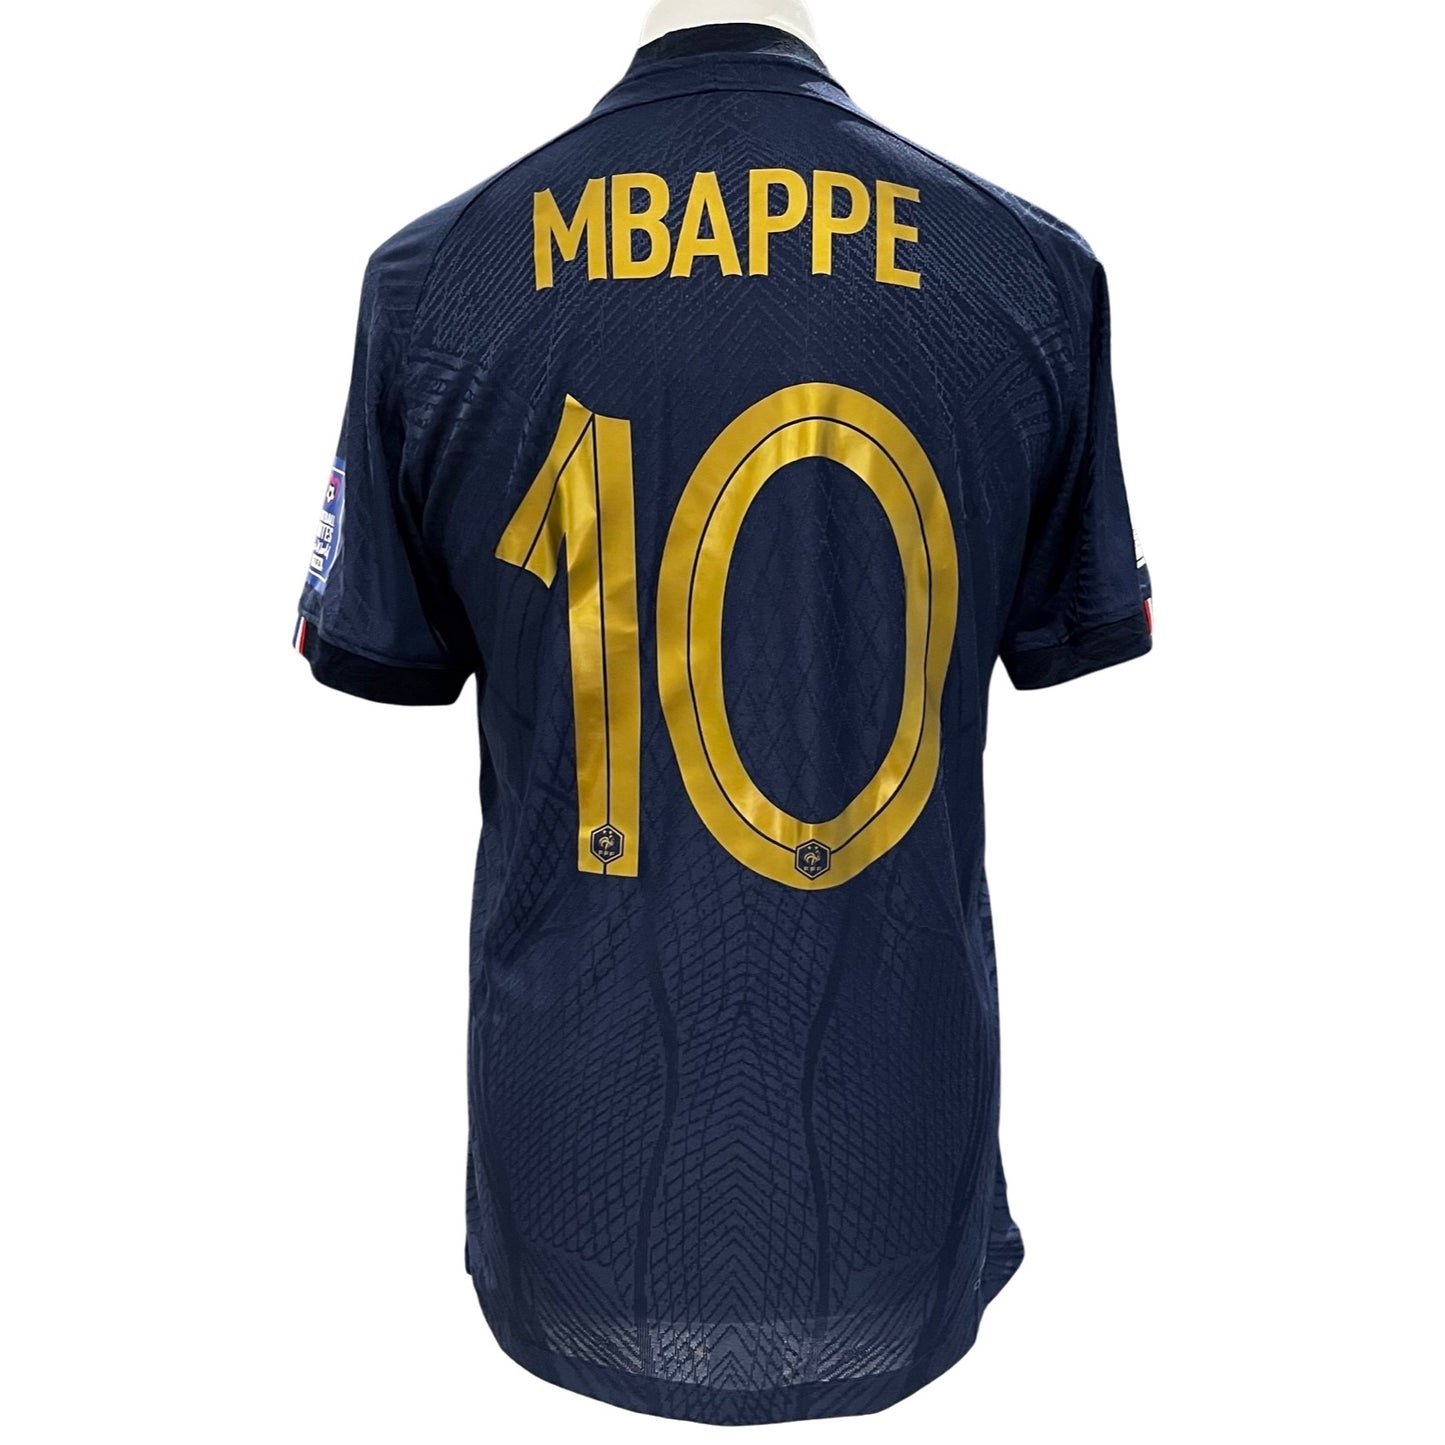 Kylian Mbappe Match Issued Nike DriFit ADV Shirt Argentina vs France 2022 FIFA World Cup Final